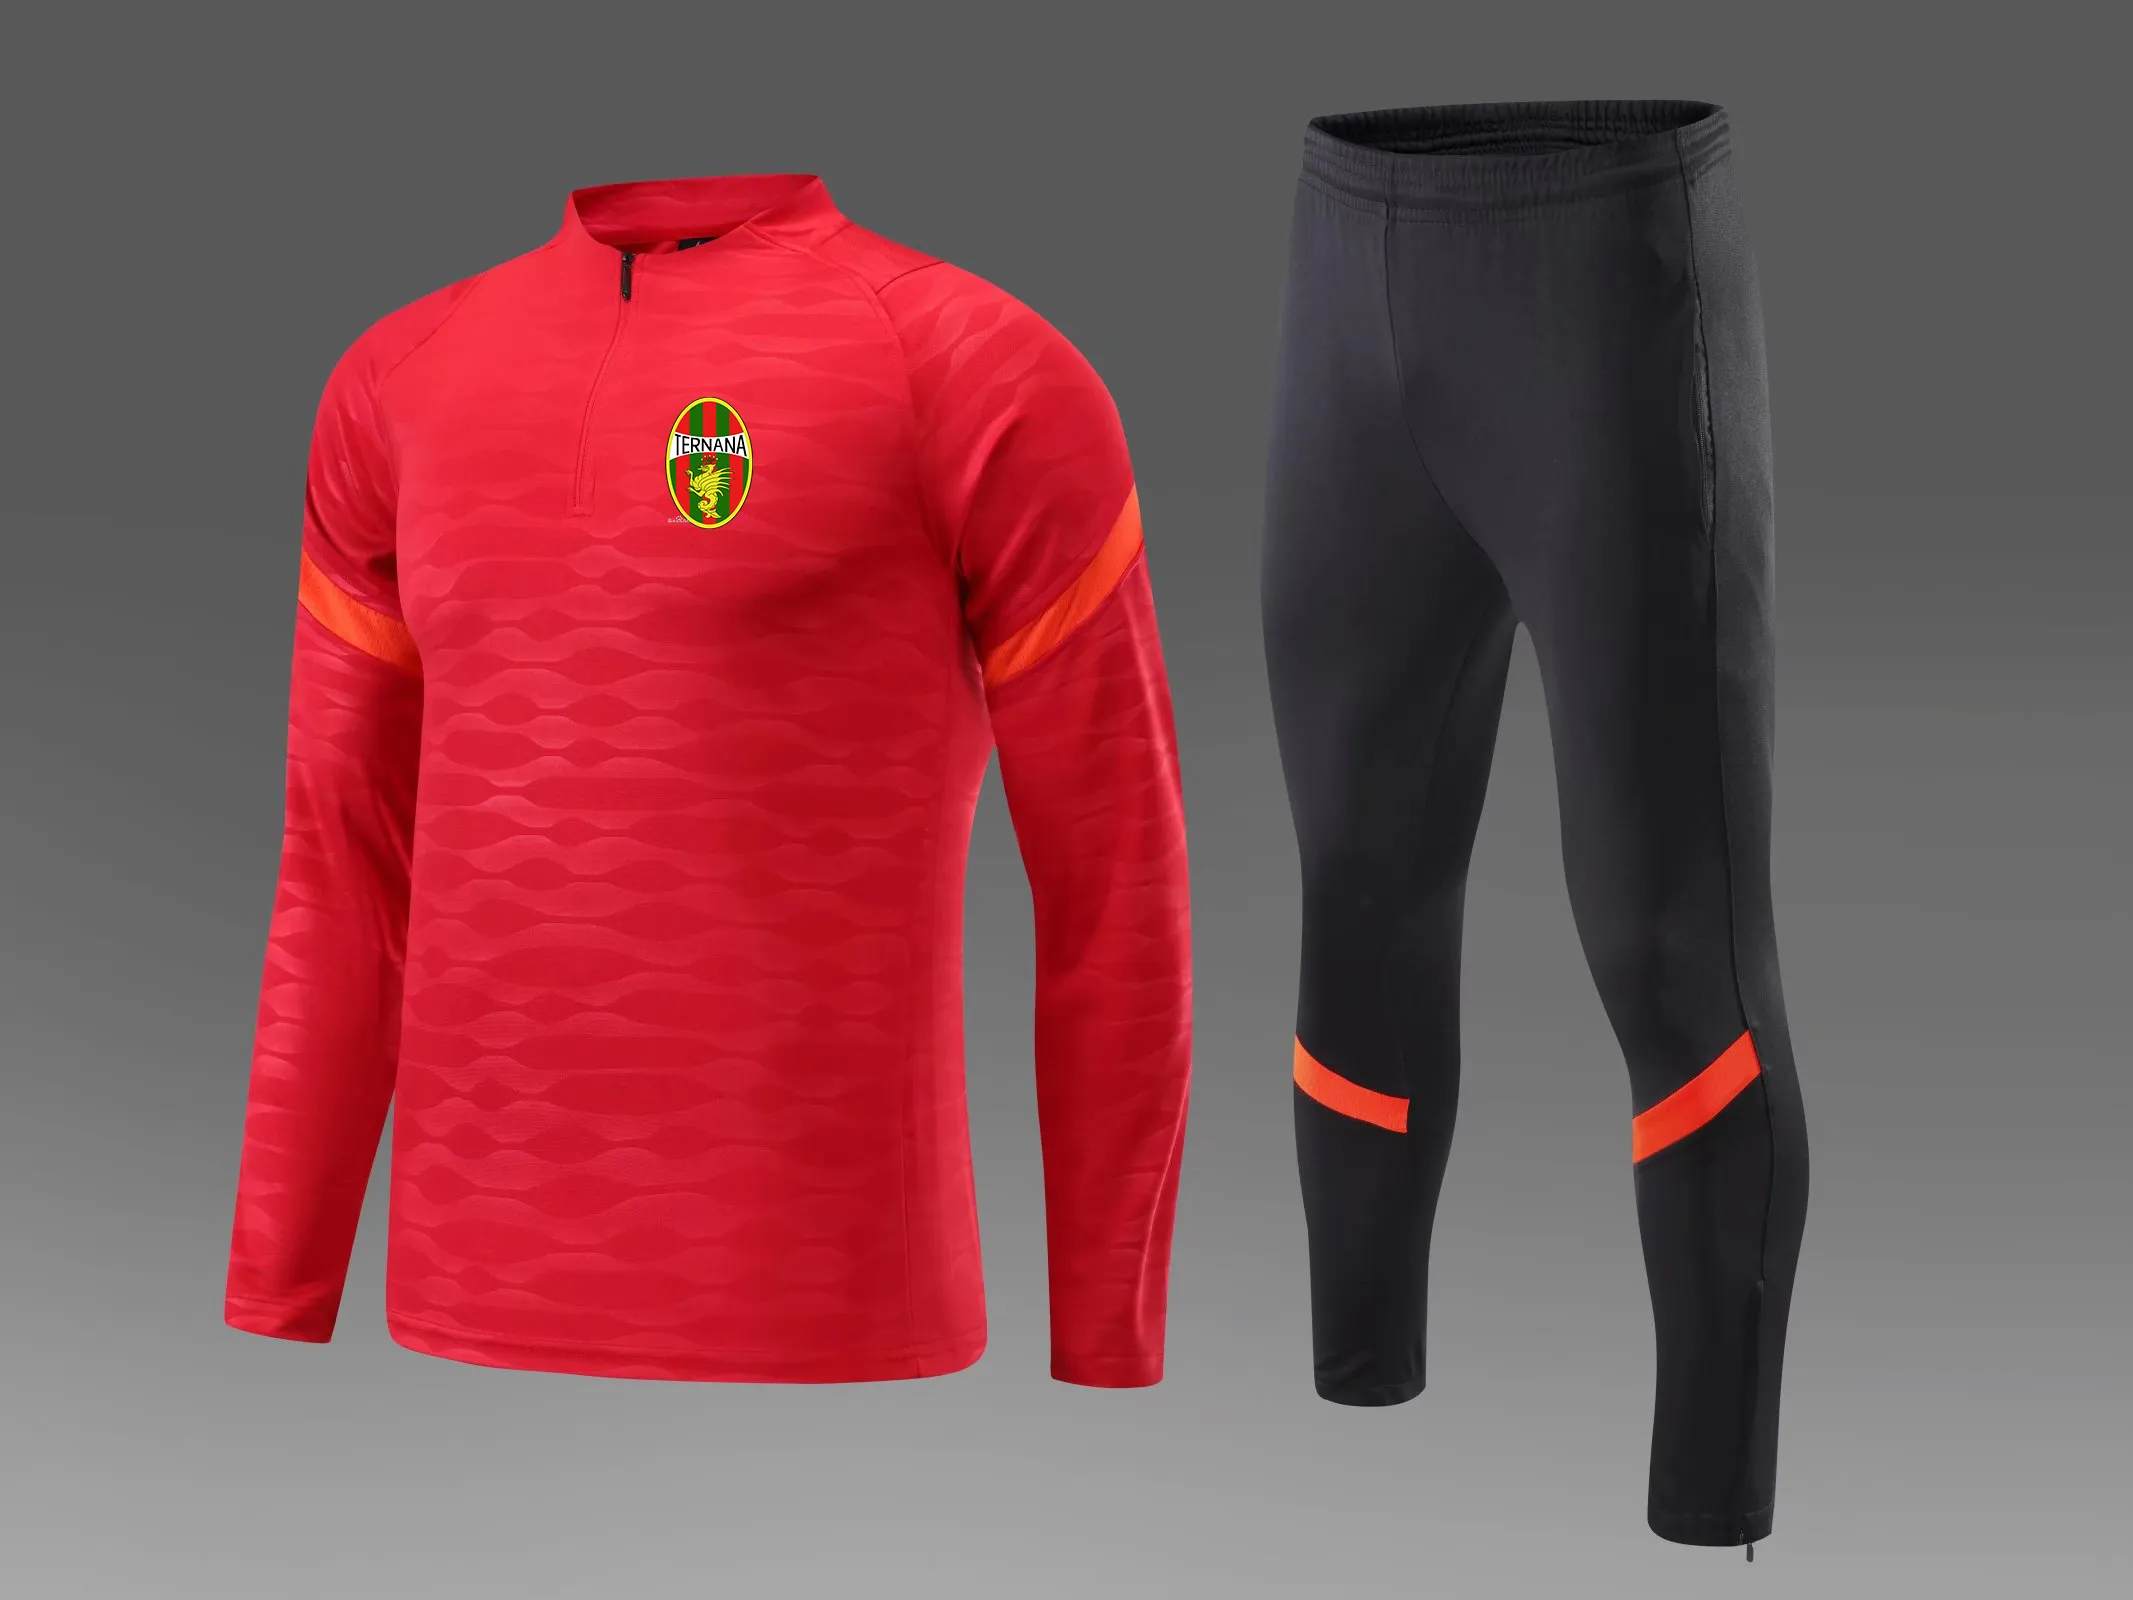 Ternana Calcio men's Tracksuits outdoor sports suit Autumn and Winter Kids Home kits Casual sweatshirt size 12-2XL